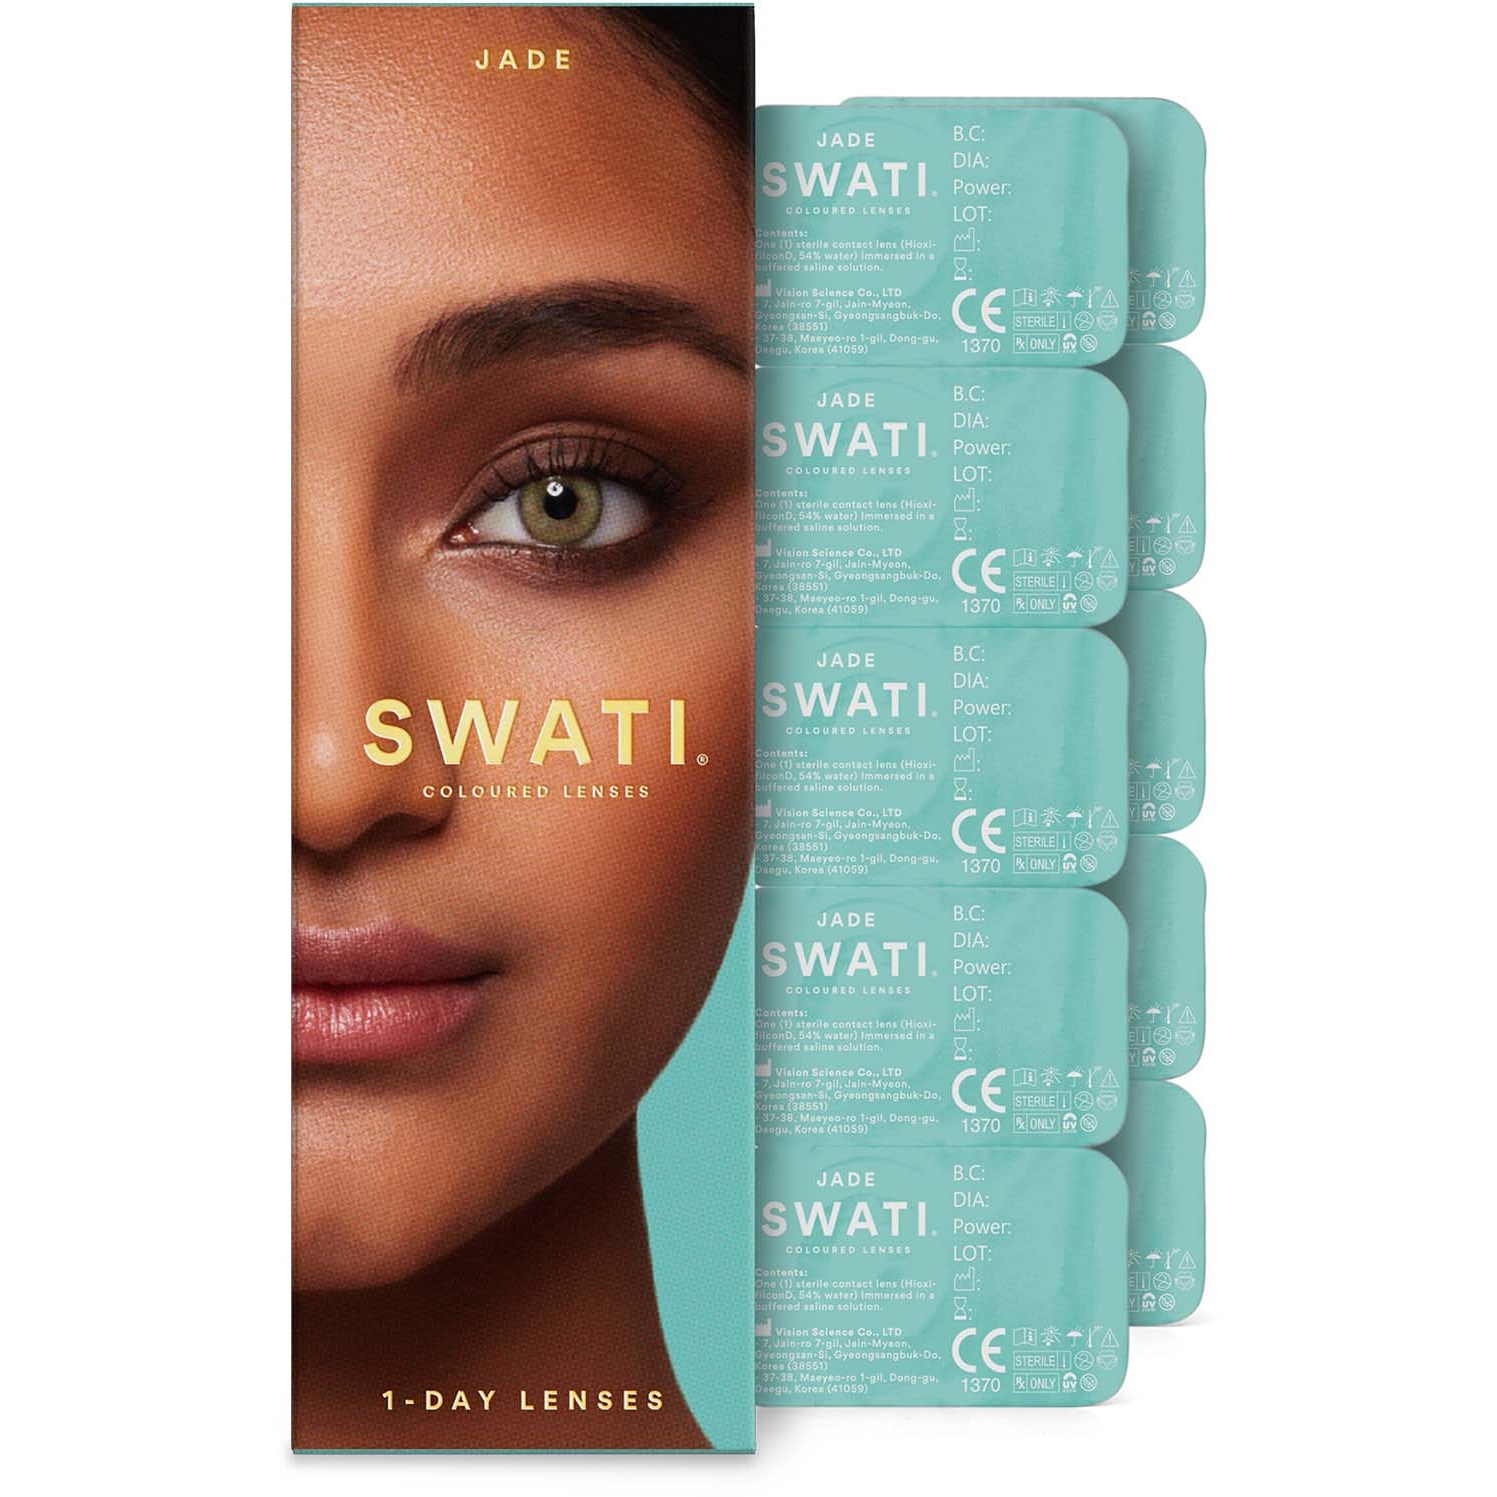 SWATI Cosmetics Daily Lenses Jade